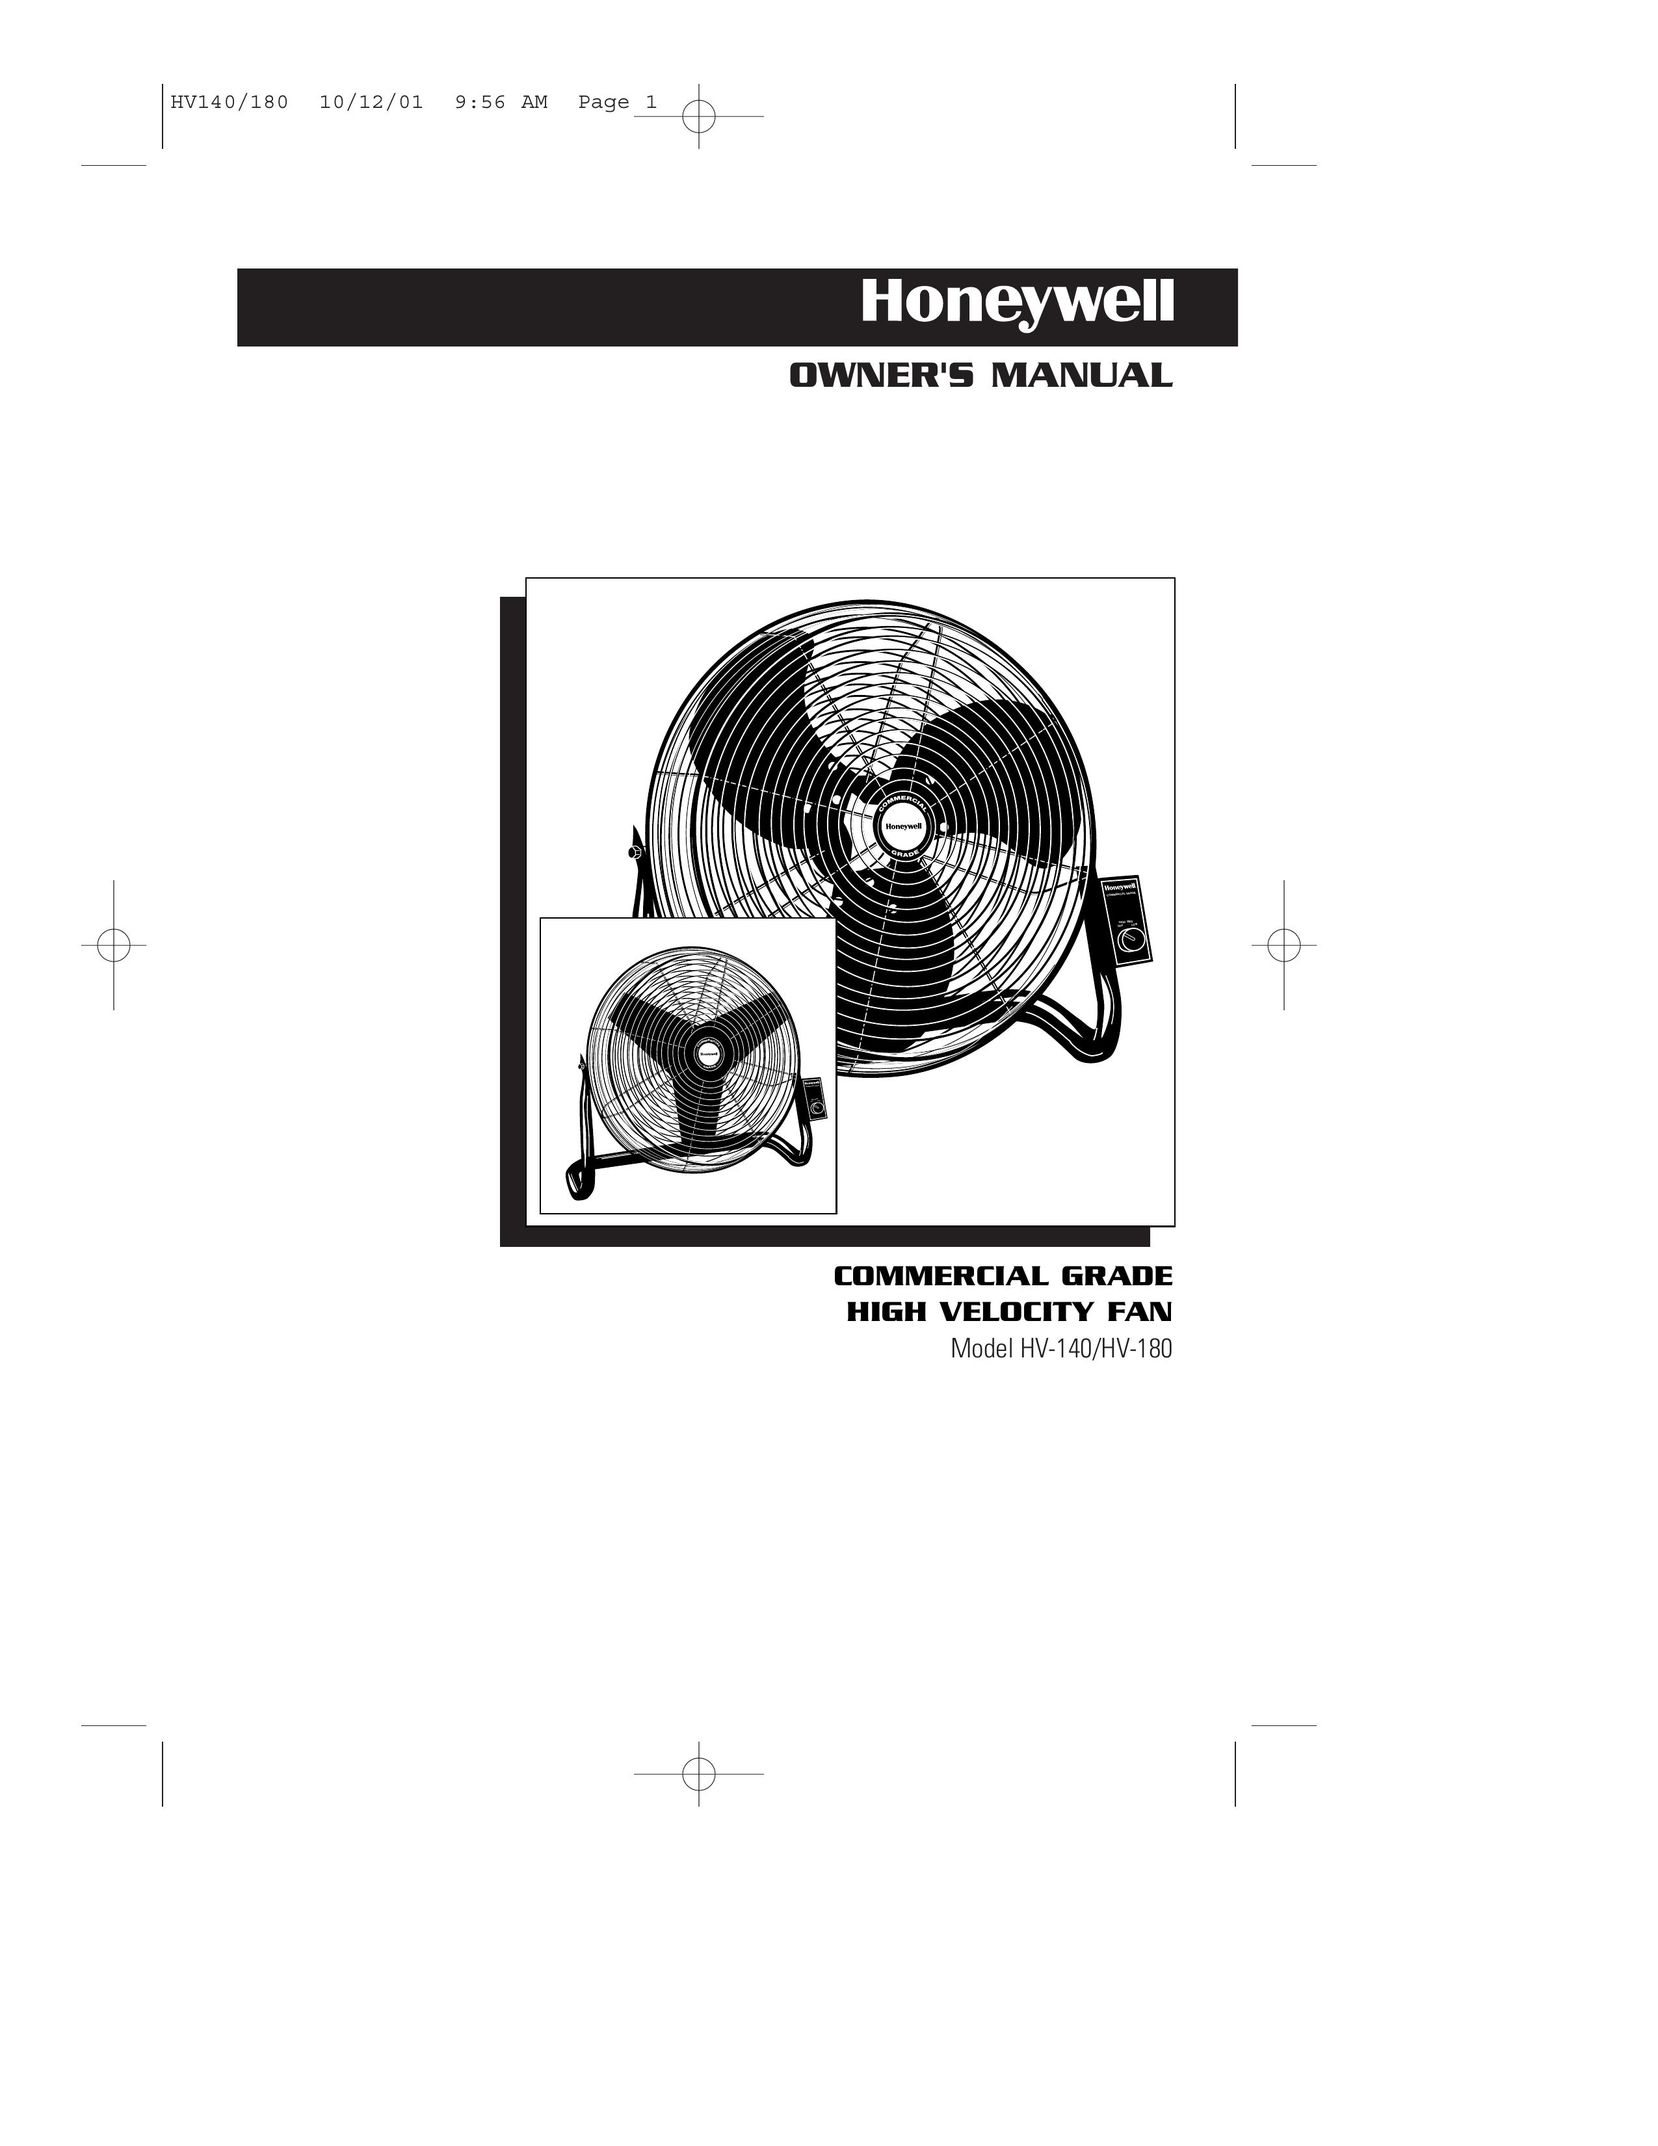 Honeywell HV180 Fan User Manual